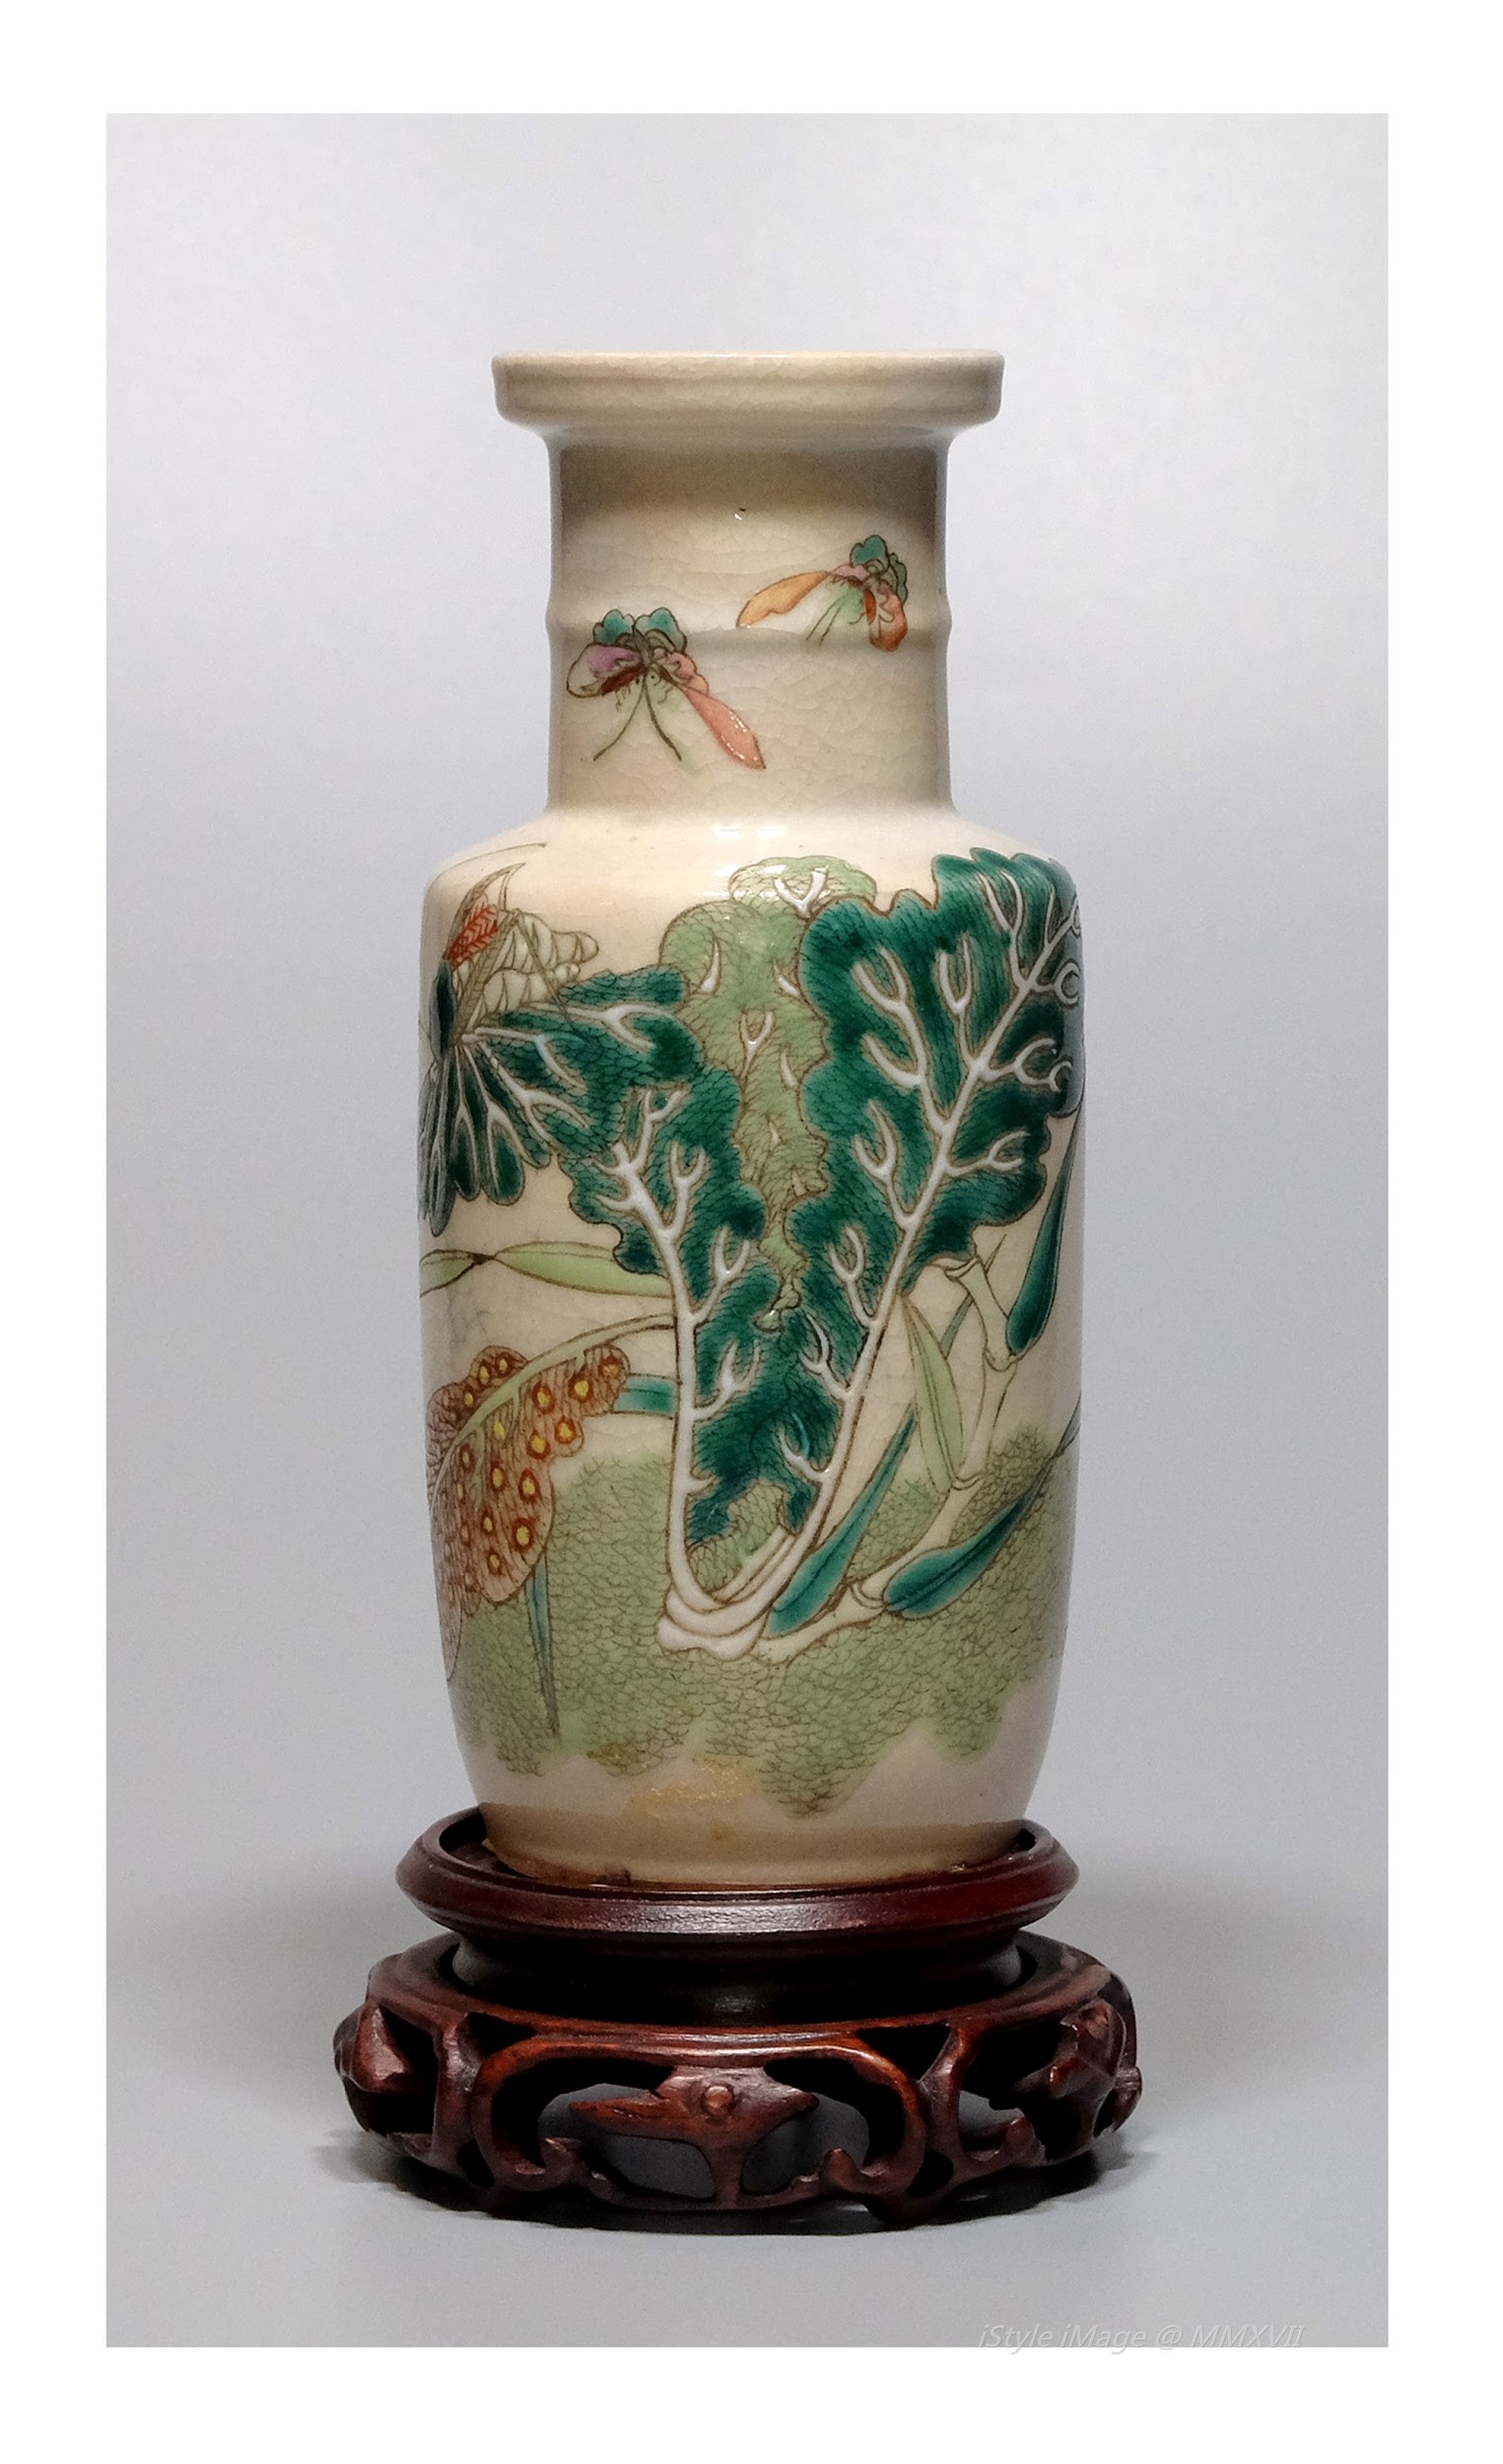 <br><h4>Lot 8 : A famille-rose rouleau vase  ( 50's last century )</h4>
							A famille-rose rouleau vase decorated with butterflies amidst greenish spring buds.
							<br>Measurements (H) high 16 CM, (W)width 7 CM<br><br><br>粉彩燈籠形花瓶  ( 上世紀五十年代 )<br>粉彩燈籠形花瓶繪上蝴蝶飛舞在綠色春芽中。<br>尺寸(H)高 16 厘米,  (W)濶7 厘米